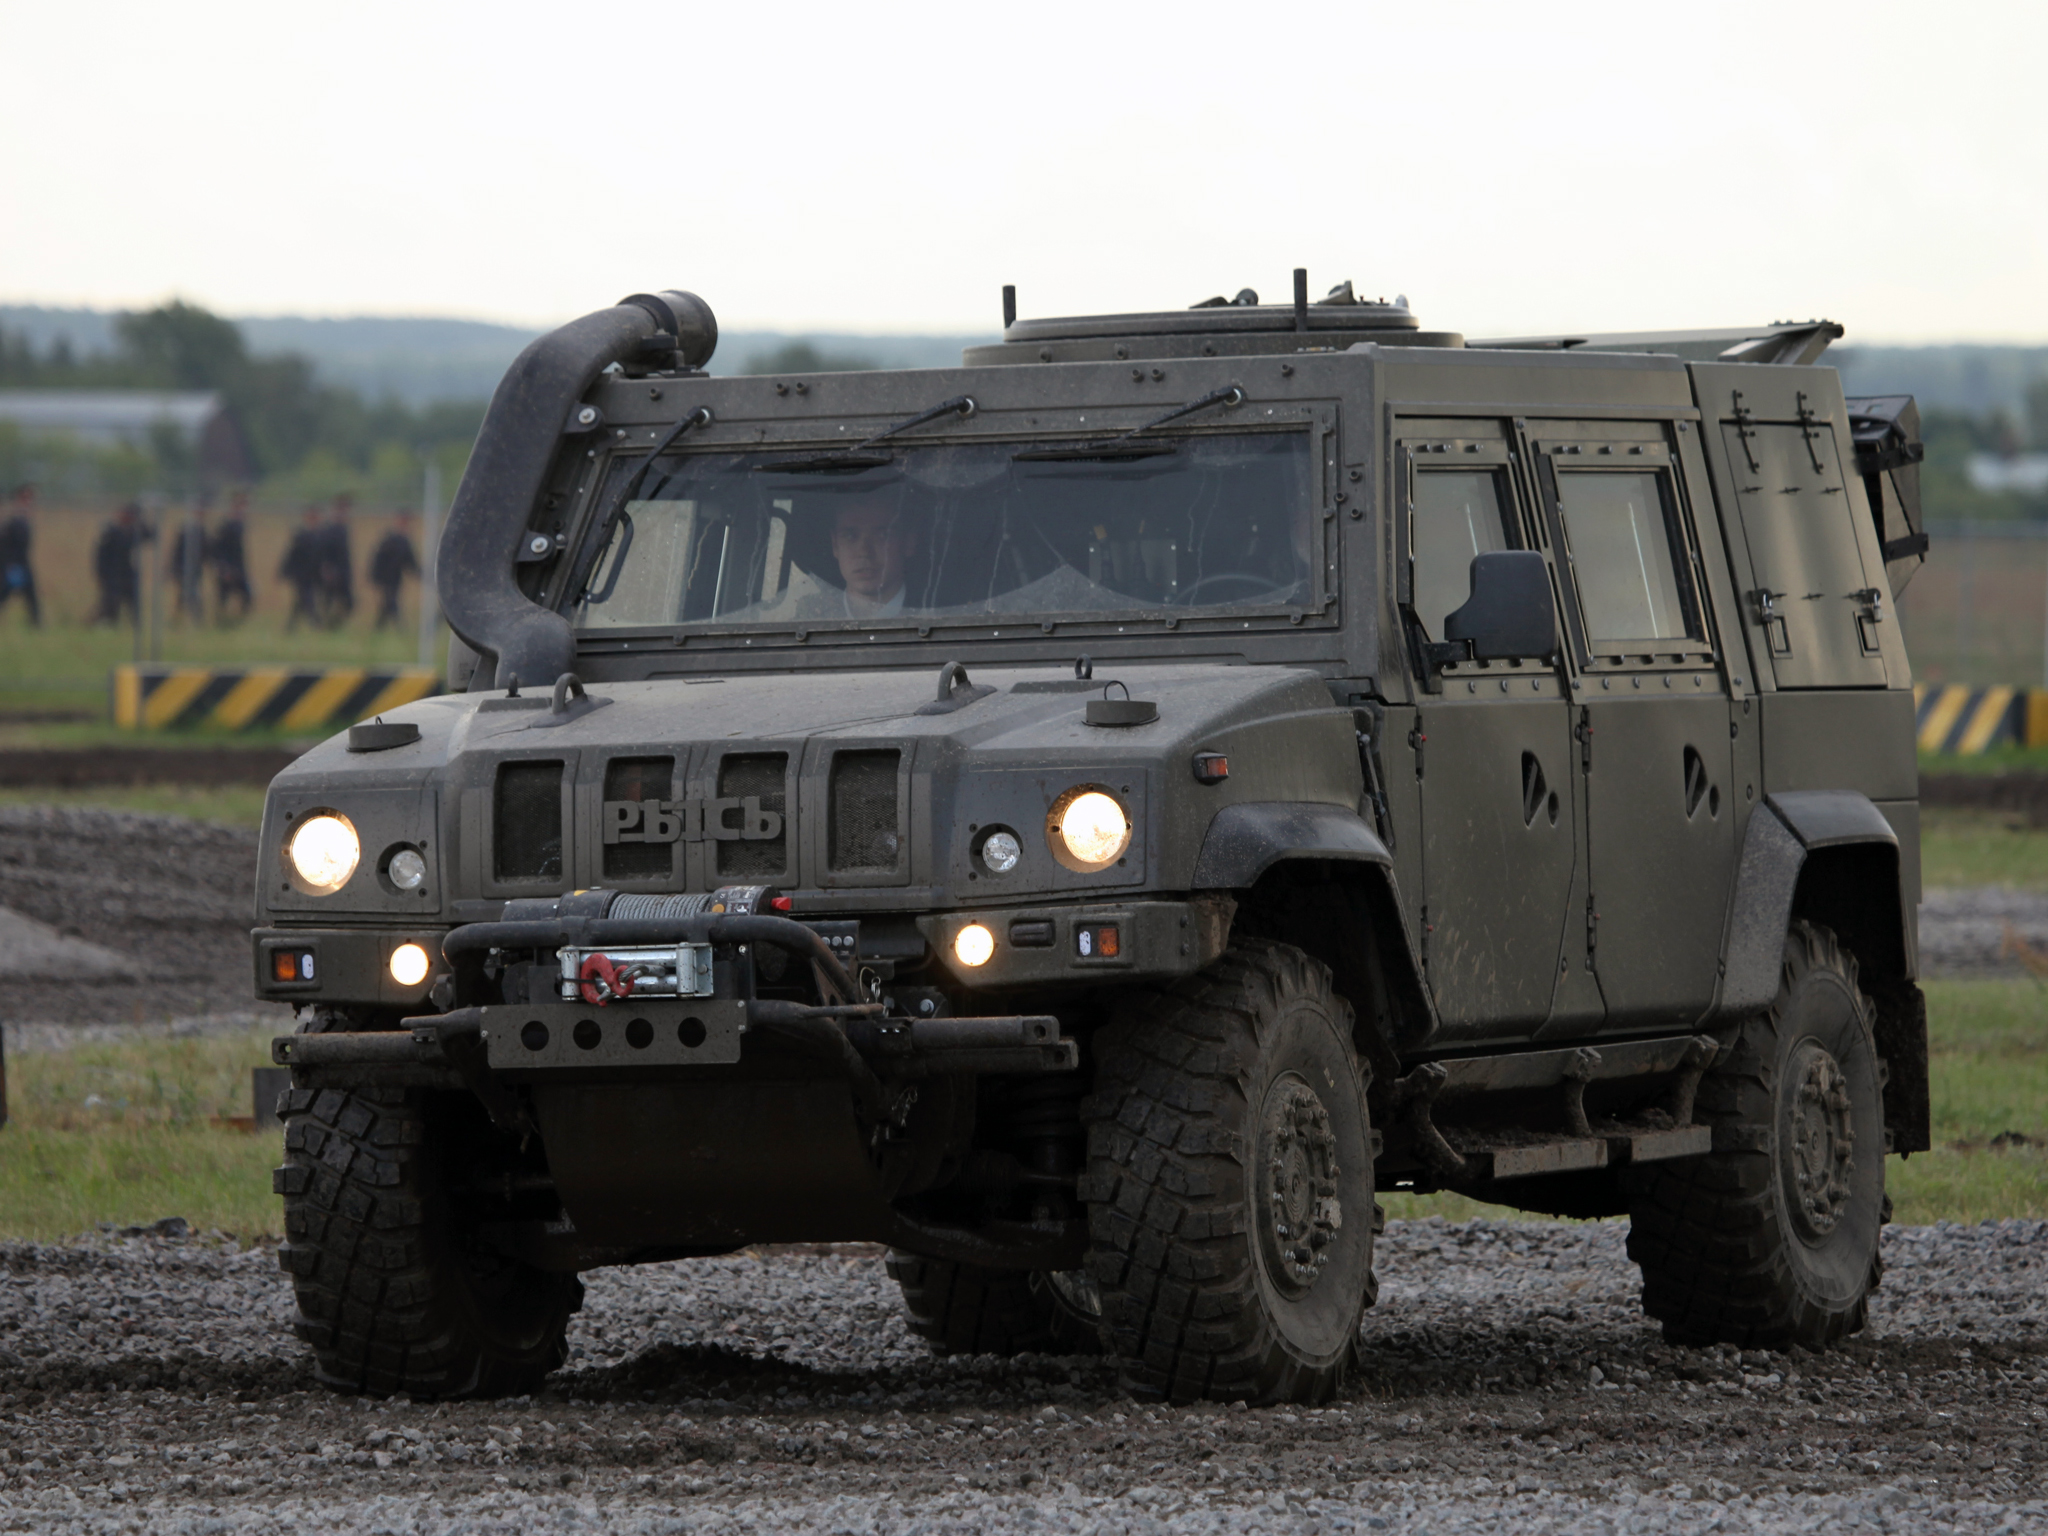 2011, Iveco, Lmv, Lynx,  m65 , 4x4, Military Wallpaper